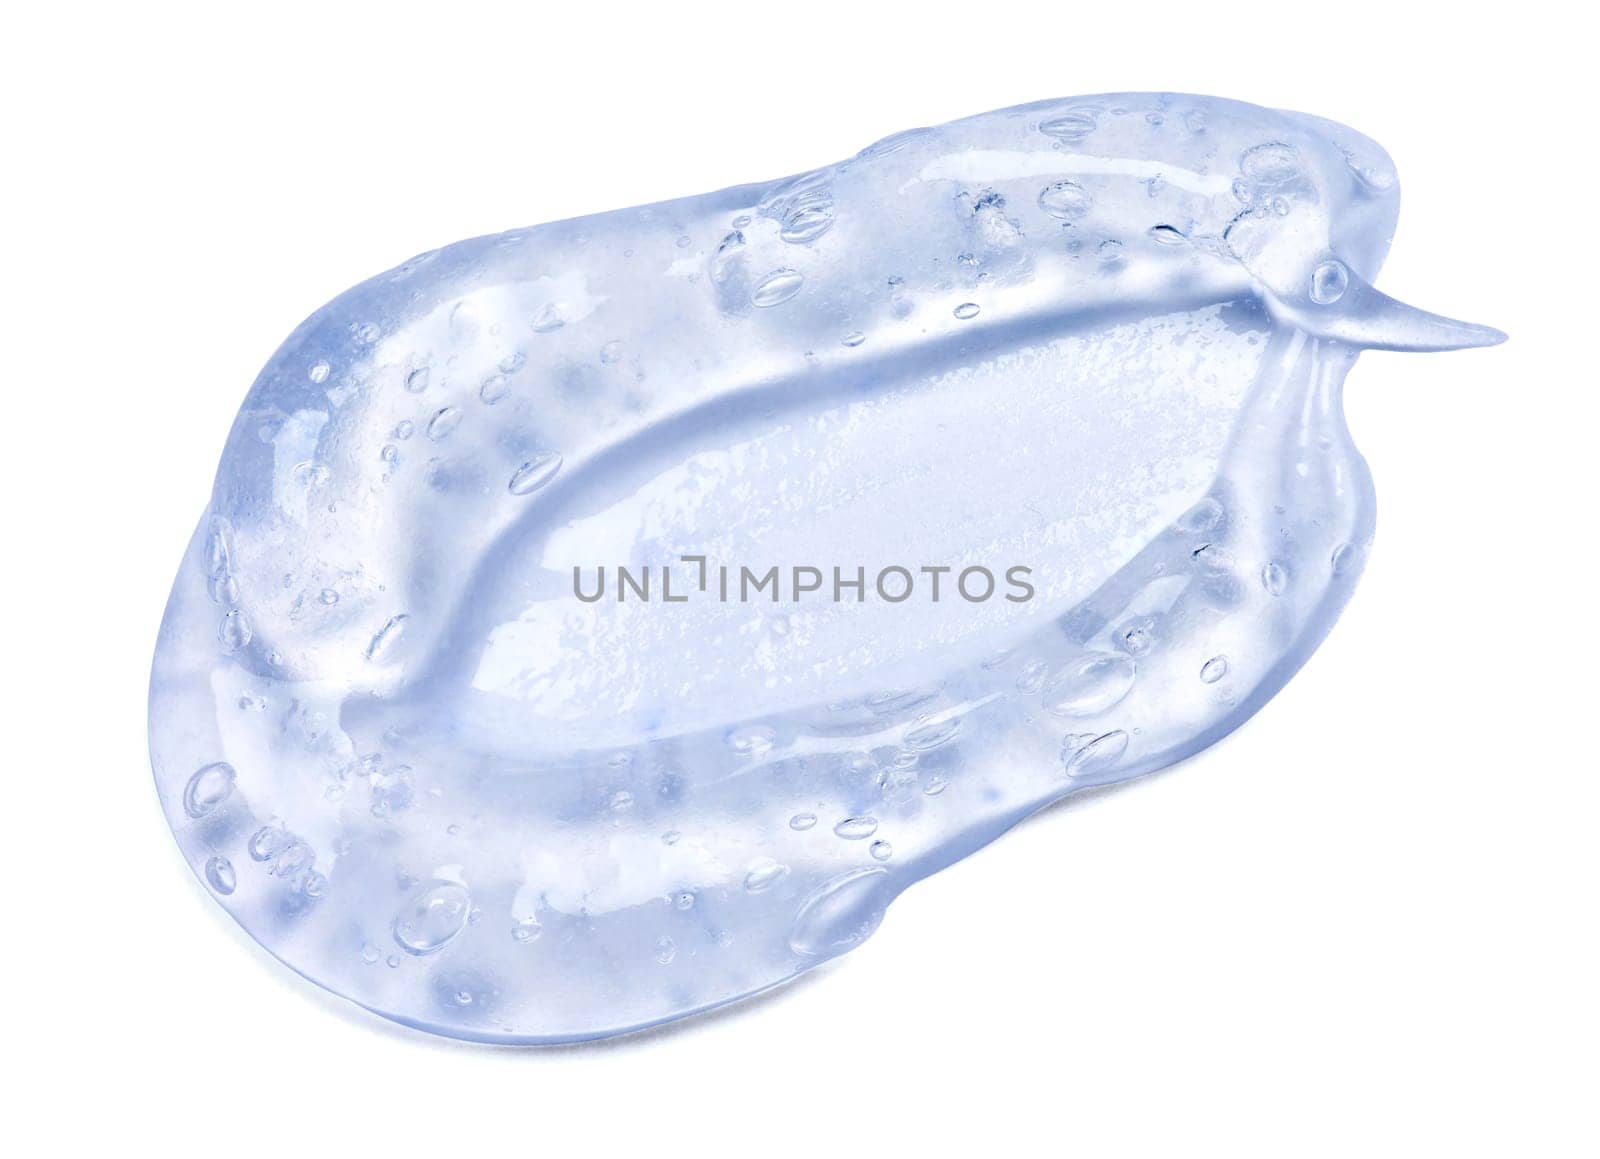 gel transparent cream beauty hygiene lotion skin care by Picsfive